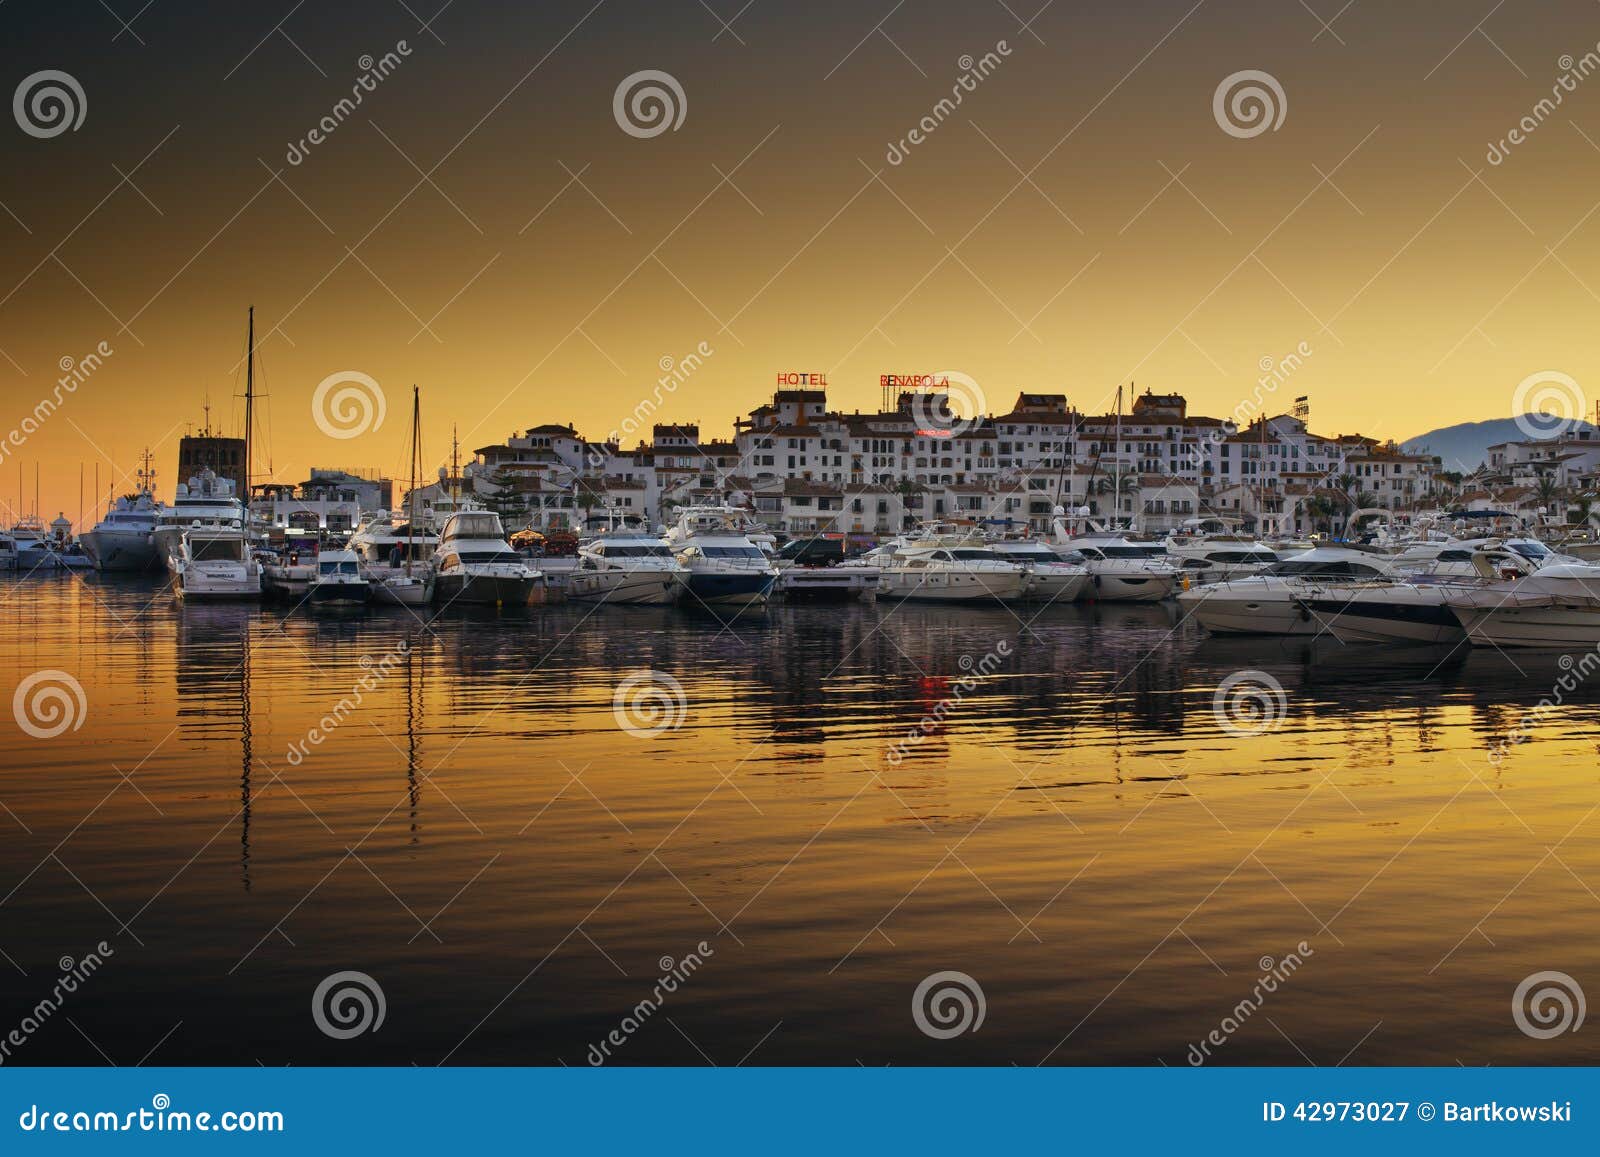 luxury yachts and motor boats moored in puerto banus marina in marbella, spain